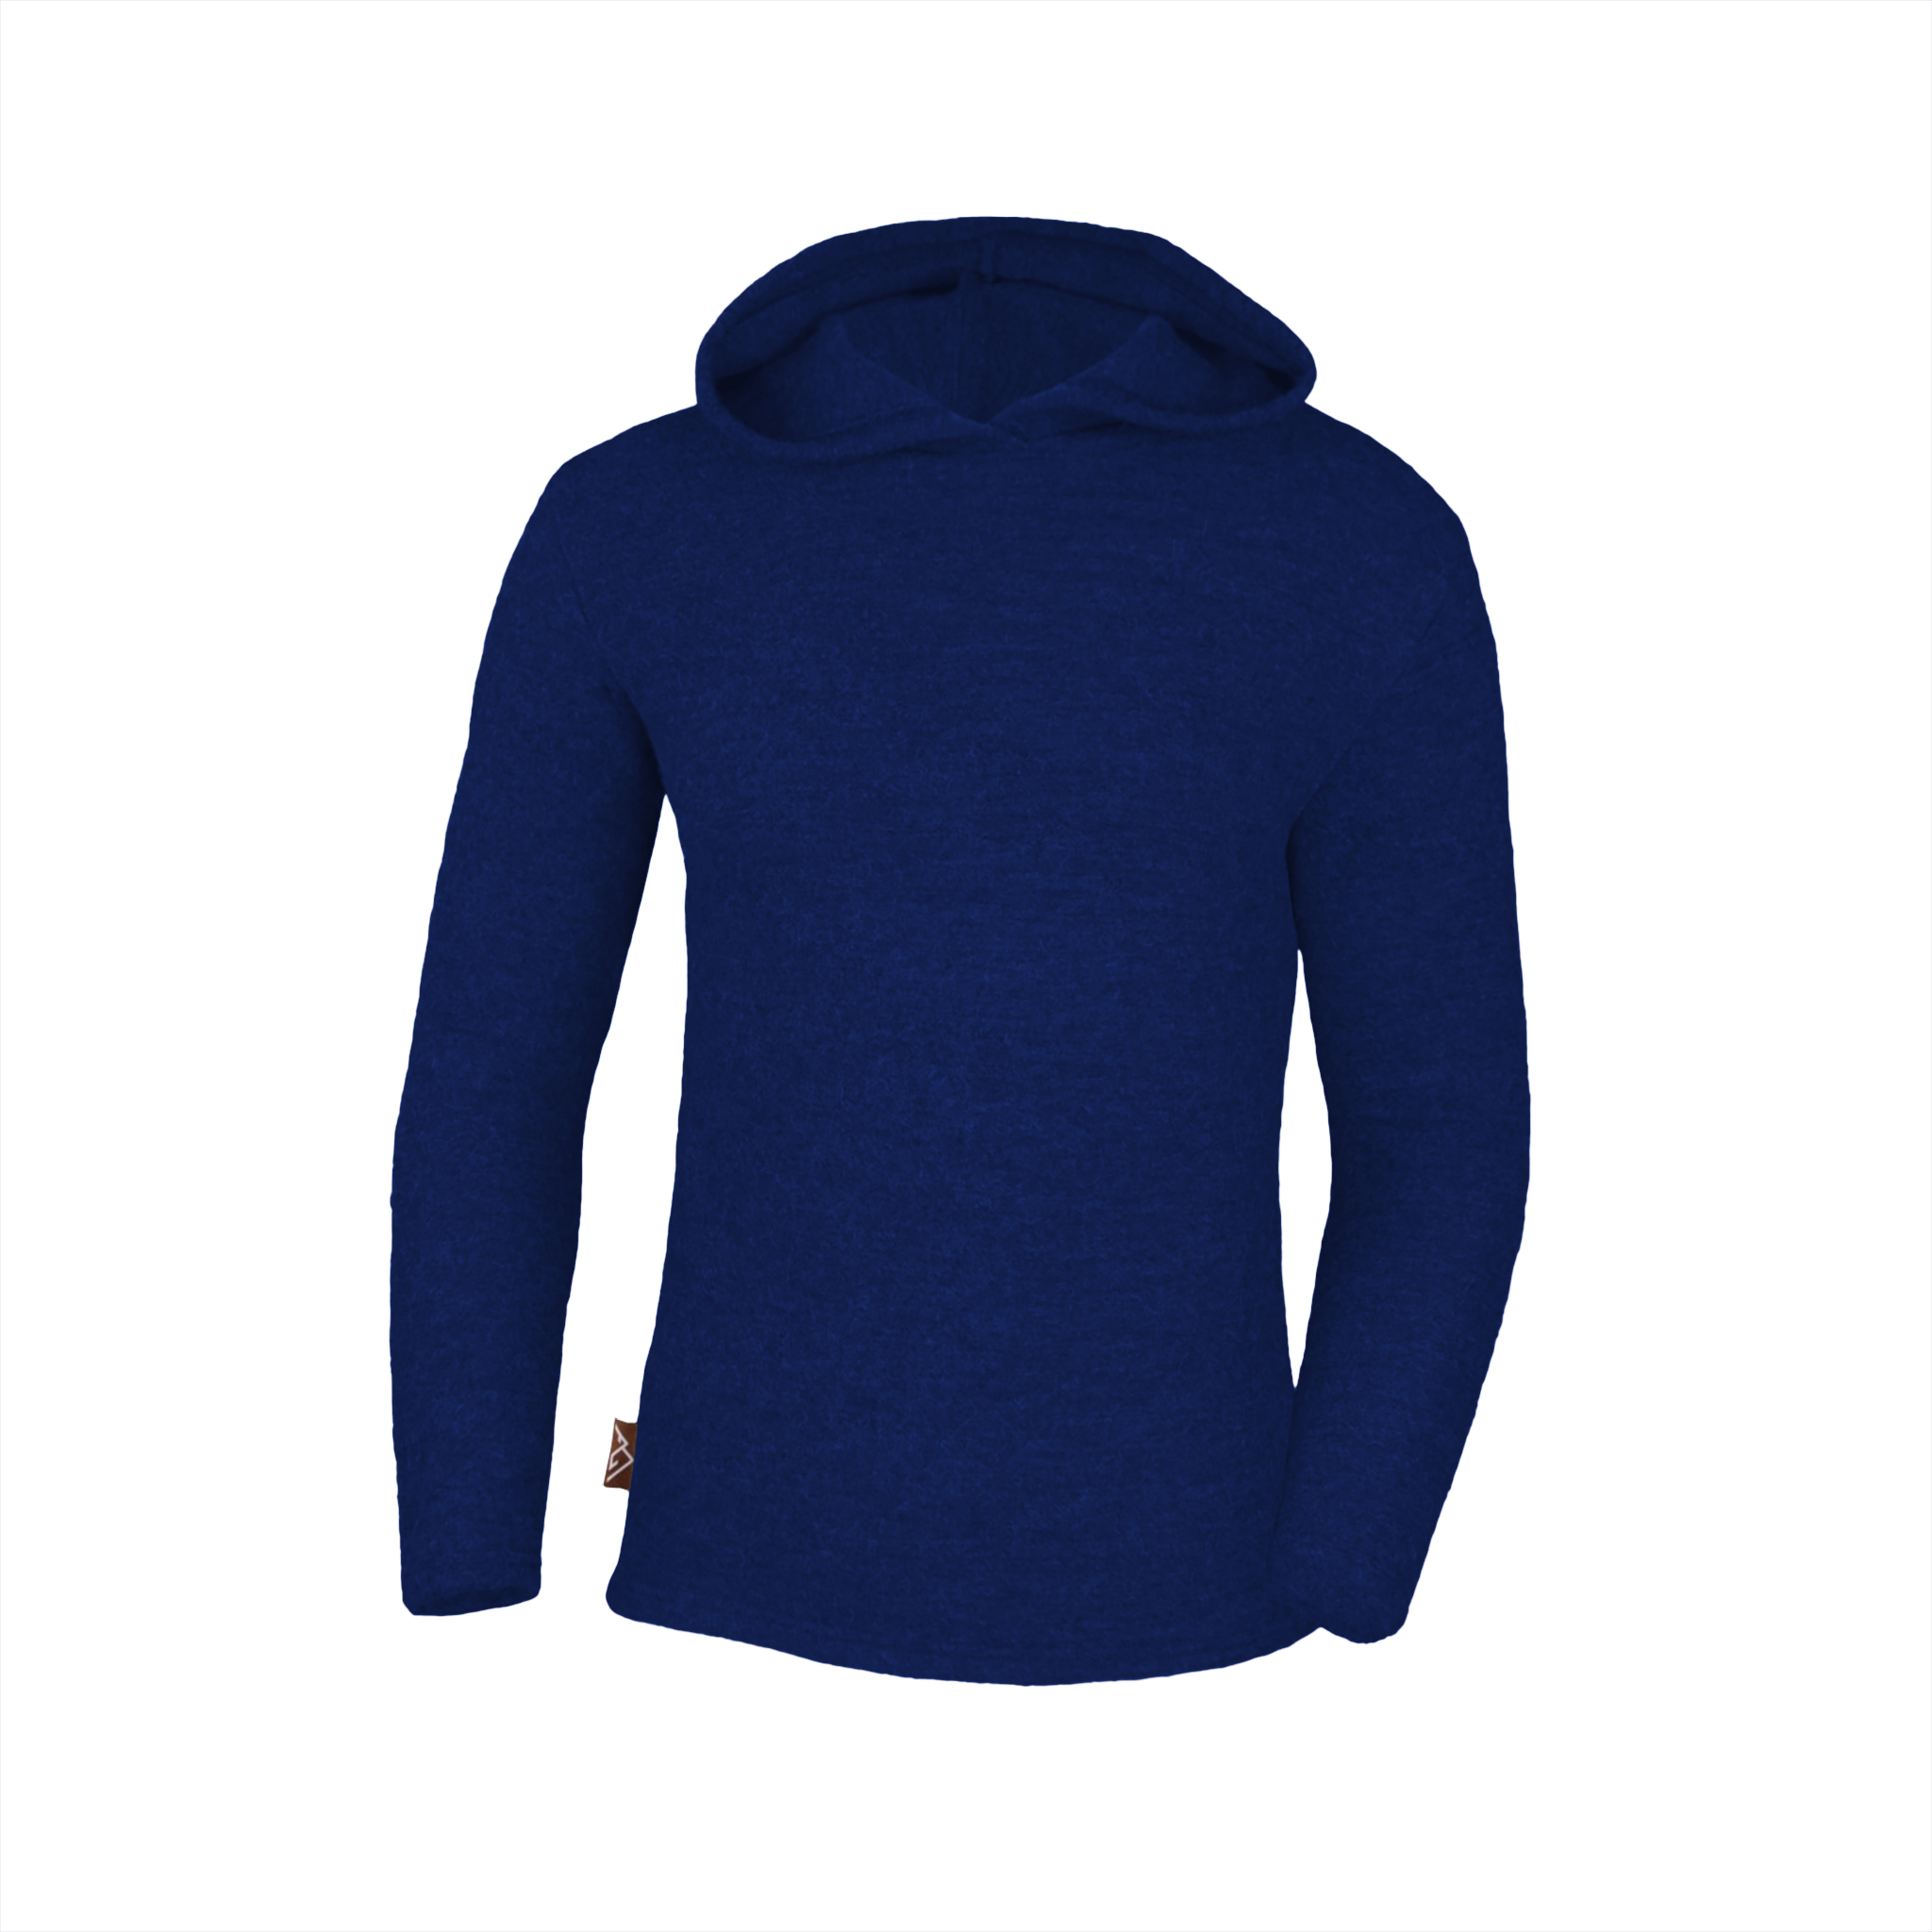 Men's Cotton Fleece Joggers - All In Motion™ Navy Blue S